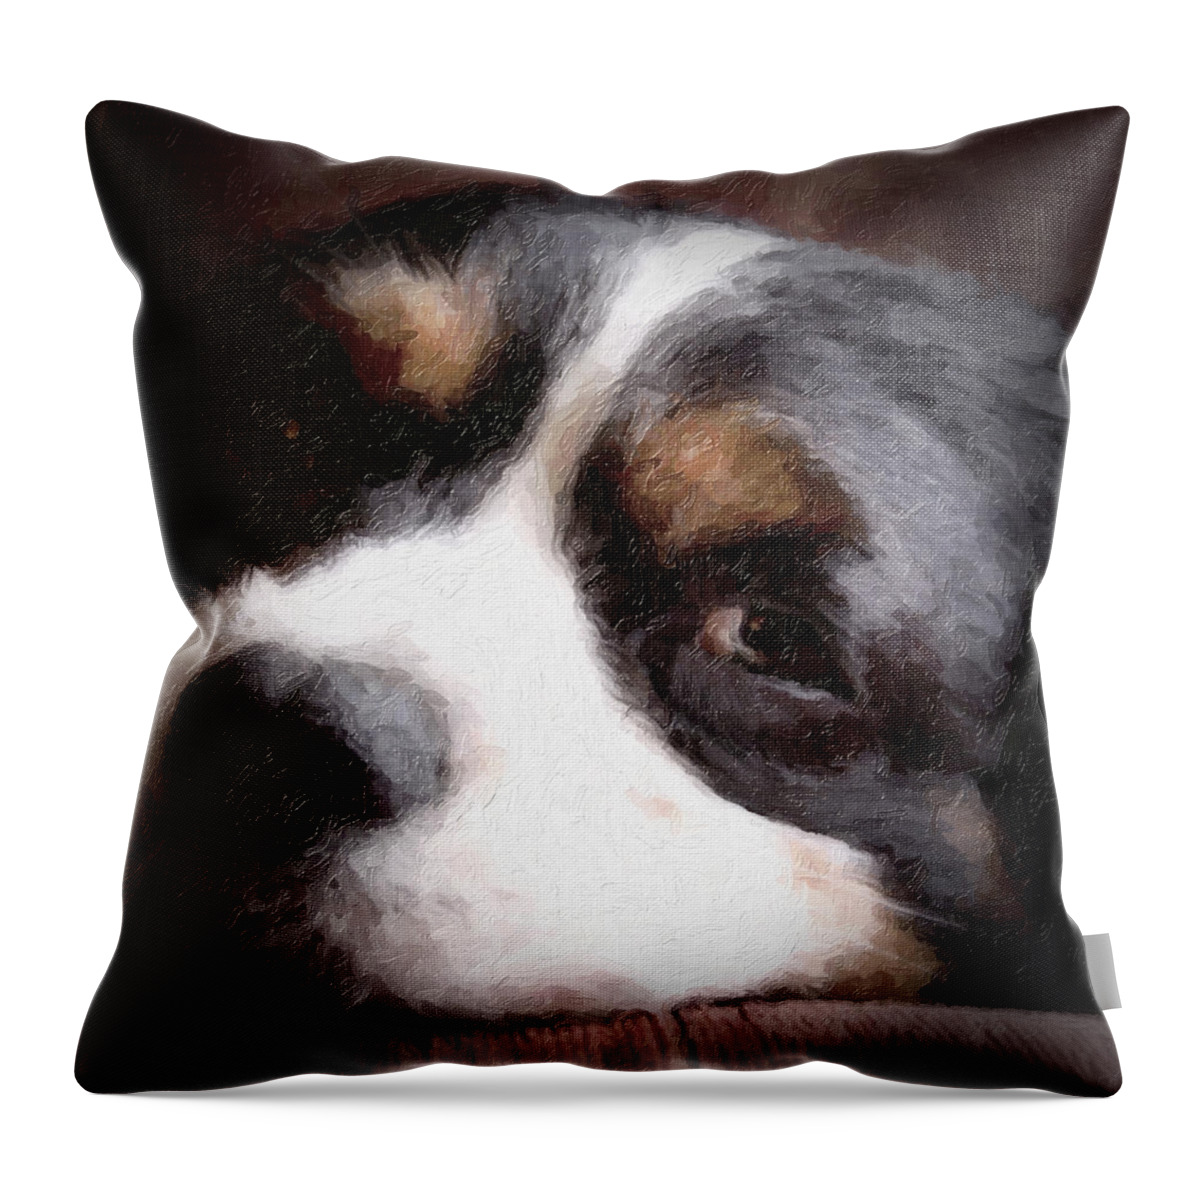 Dog Throw Pillow featuring the photograph Springer Spaniel by Tom Mc Nemar